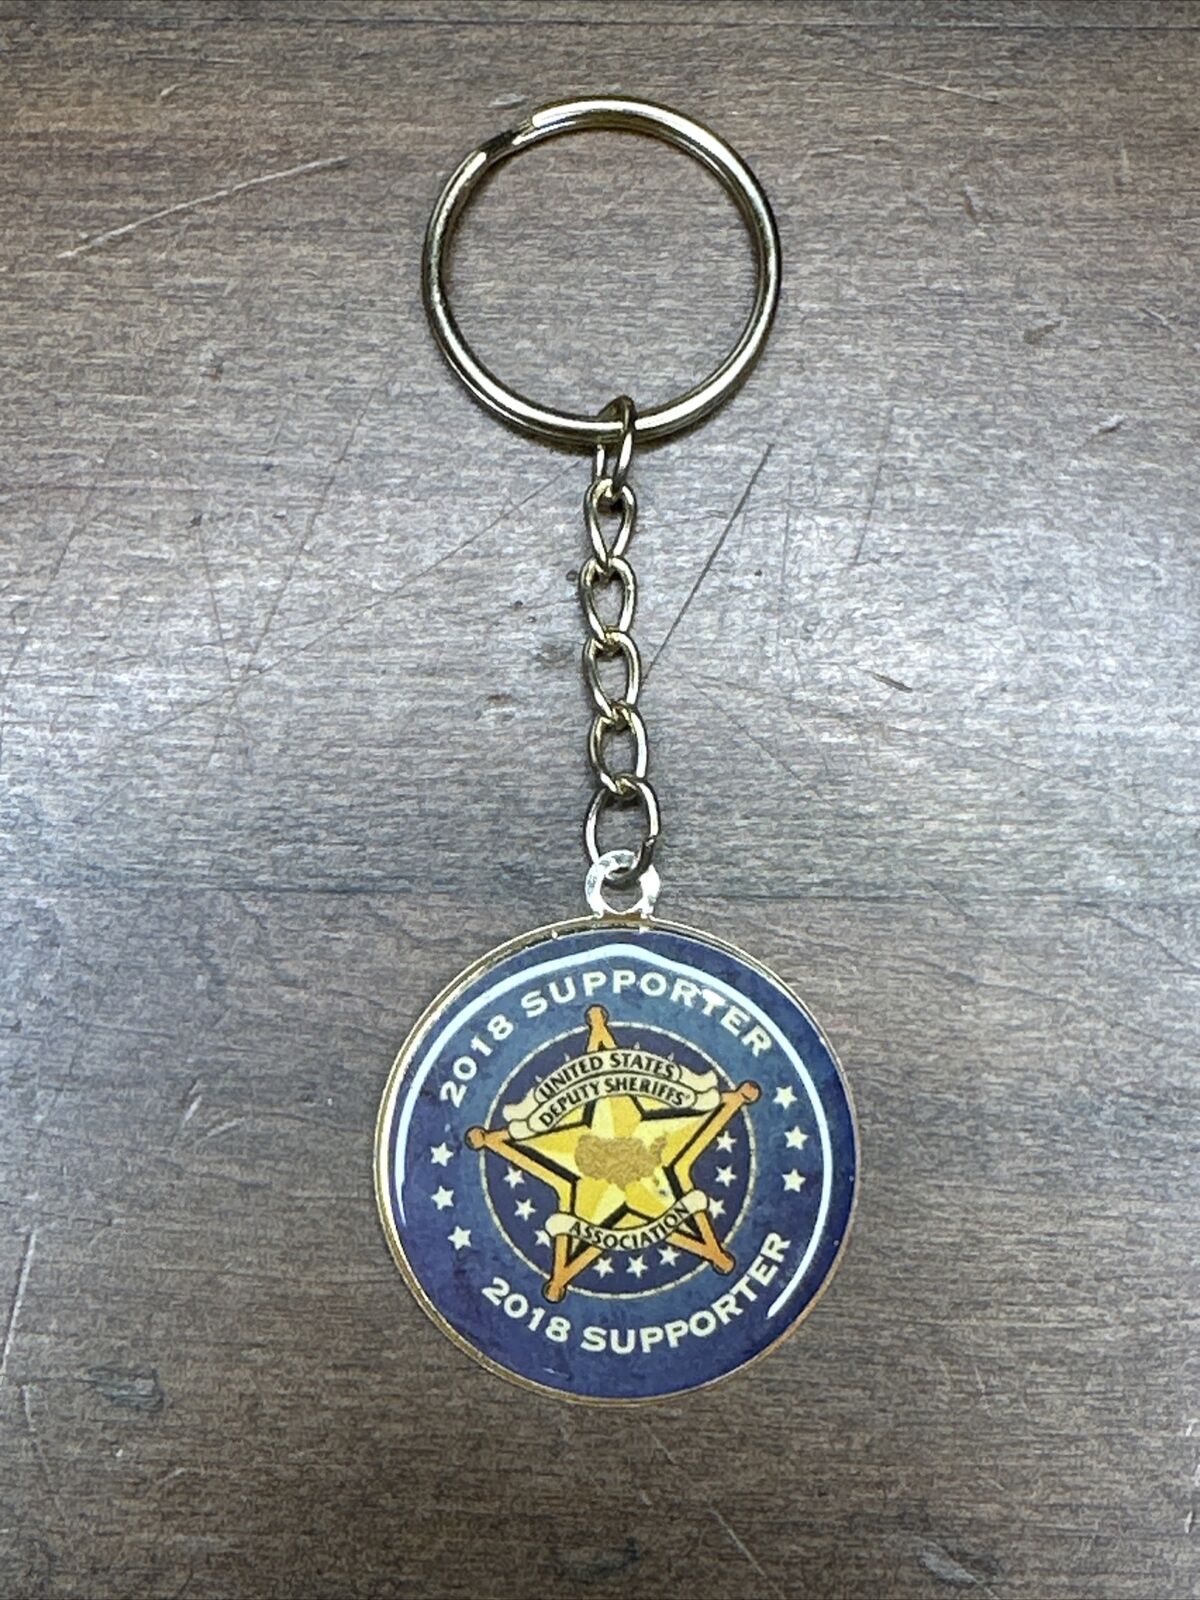 2018 Supporter United States Deputy Sheriff’s Association Goldtone Key Chain